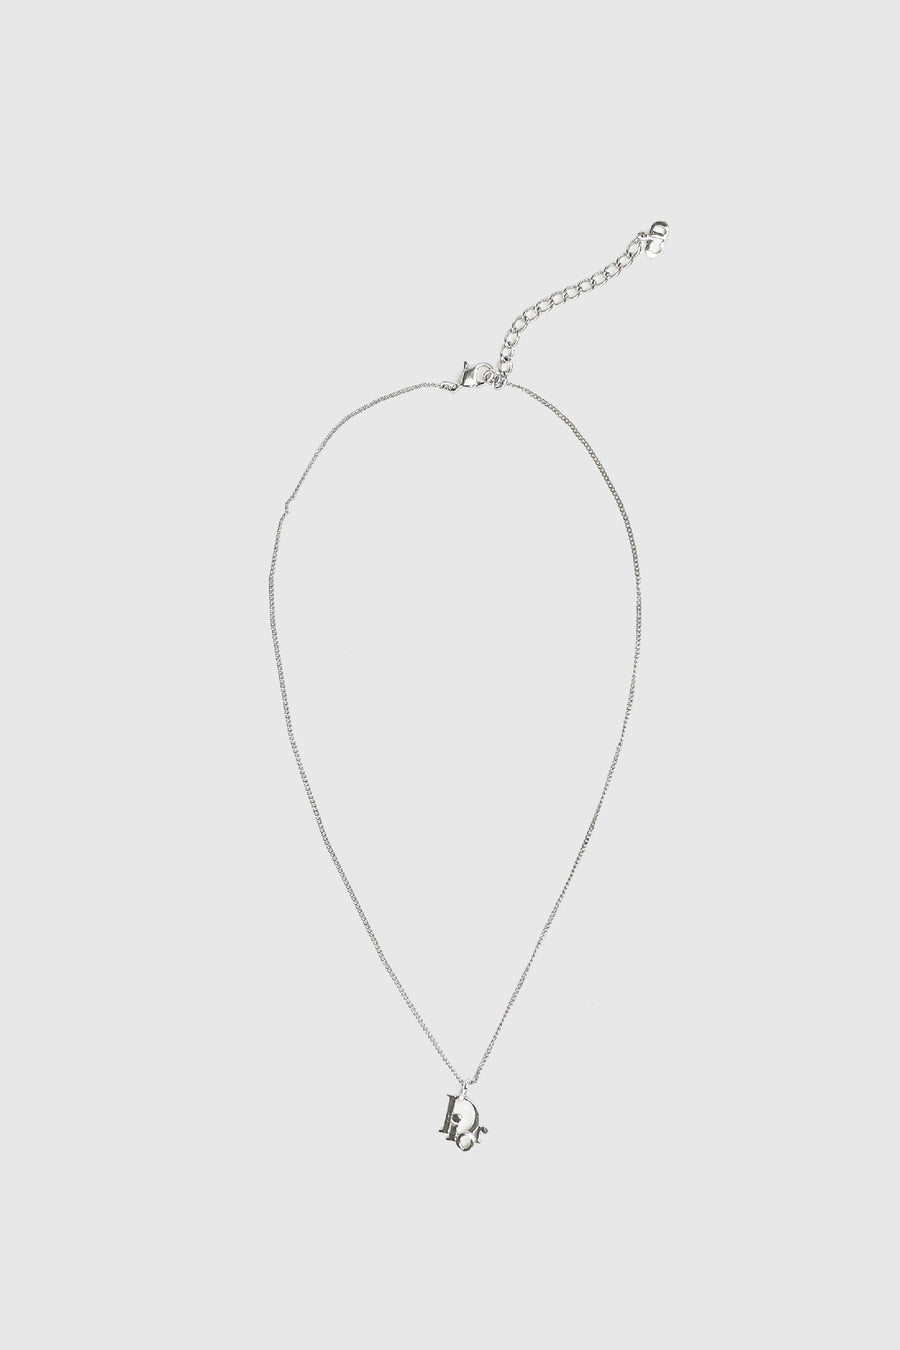 Authentic Christian Dior Necklace logo vintage long Metallic #10840 | eBay